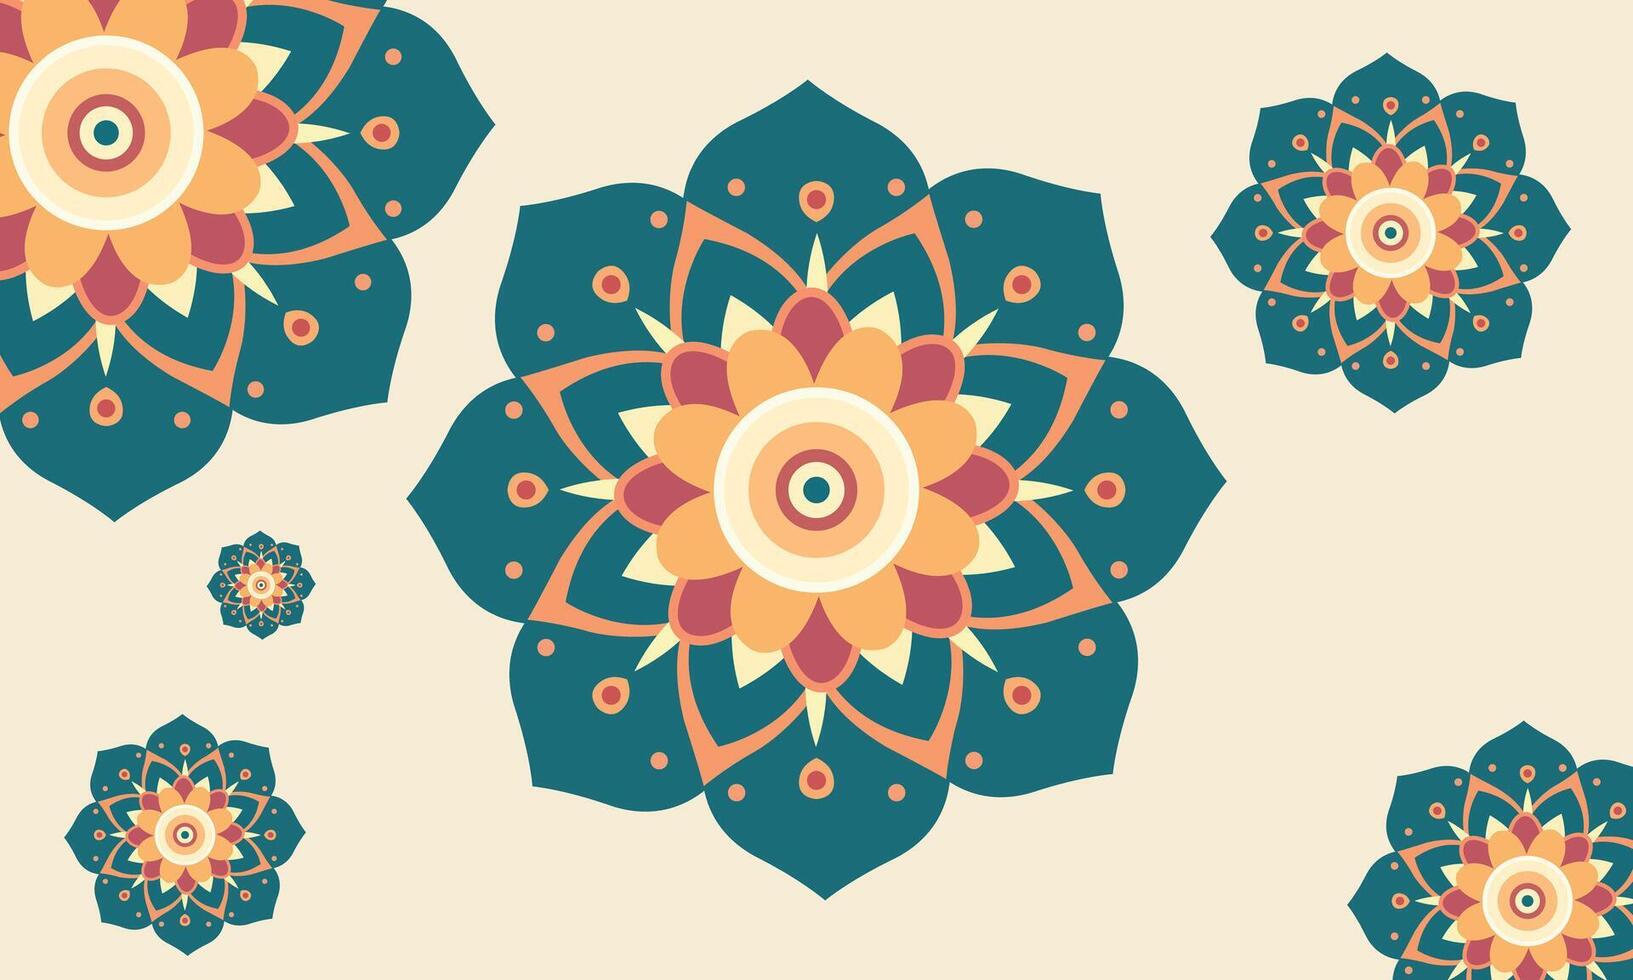 blomma mandala med dekorativ design retro stil bakgrund. etnisk mandala med färgrik stam- prydnad vektor